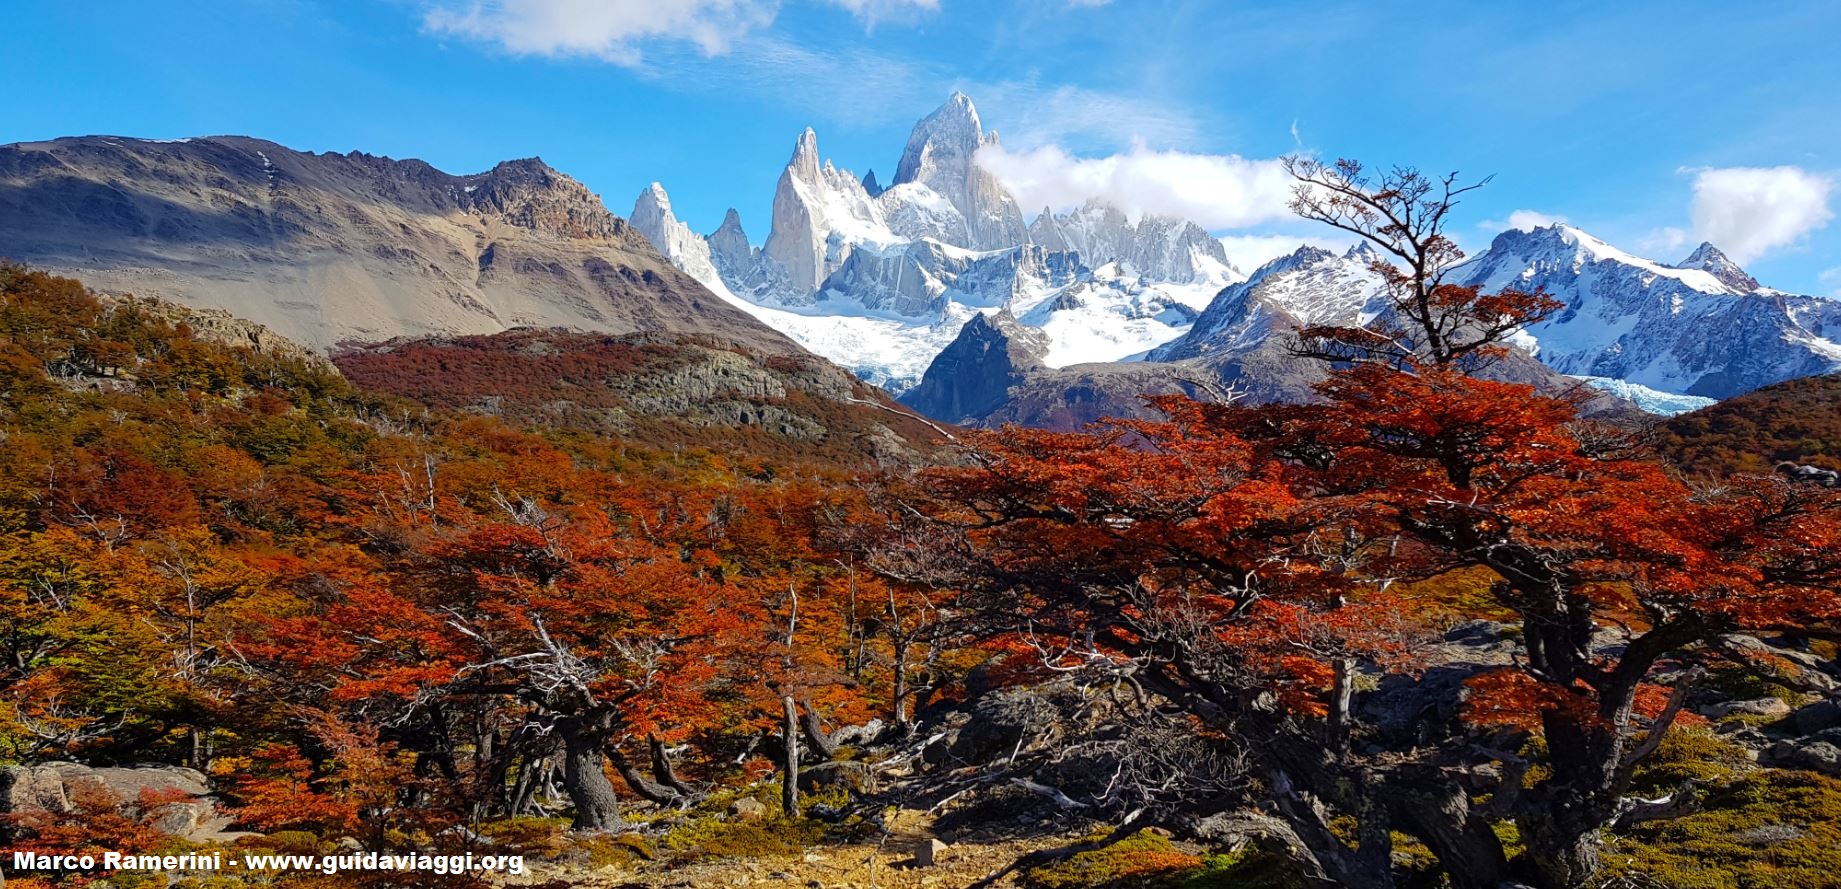 Monte Fitz Roy, Parco Nazionale Los Glaciares, Argentina. Autore e Copyright Marco Ramerini.,.